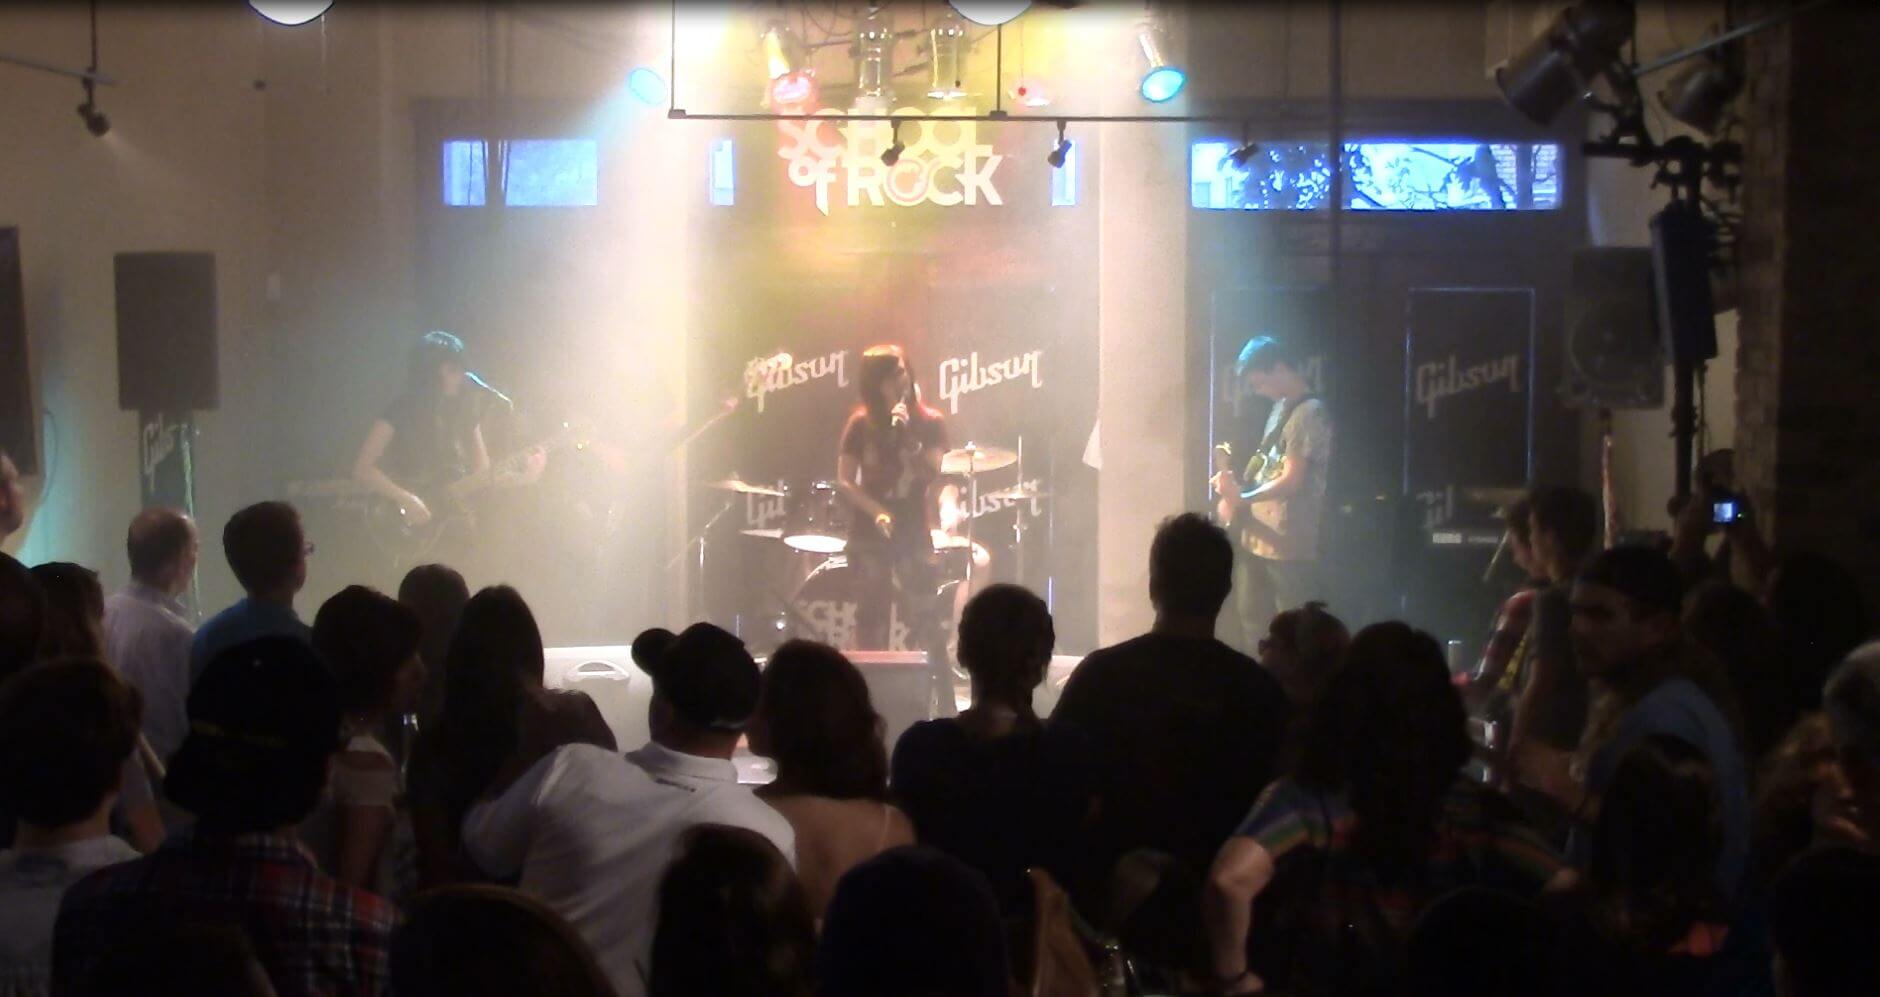 School of Rock Oviedo performing Summer 2013 Seasonal Show 